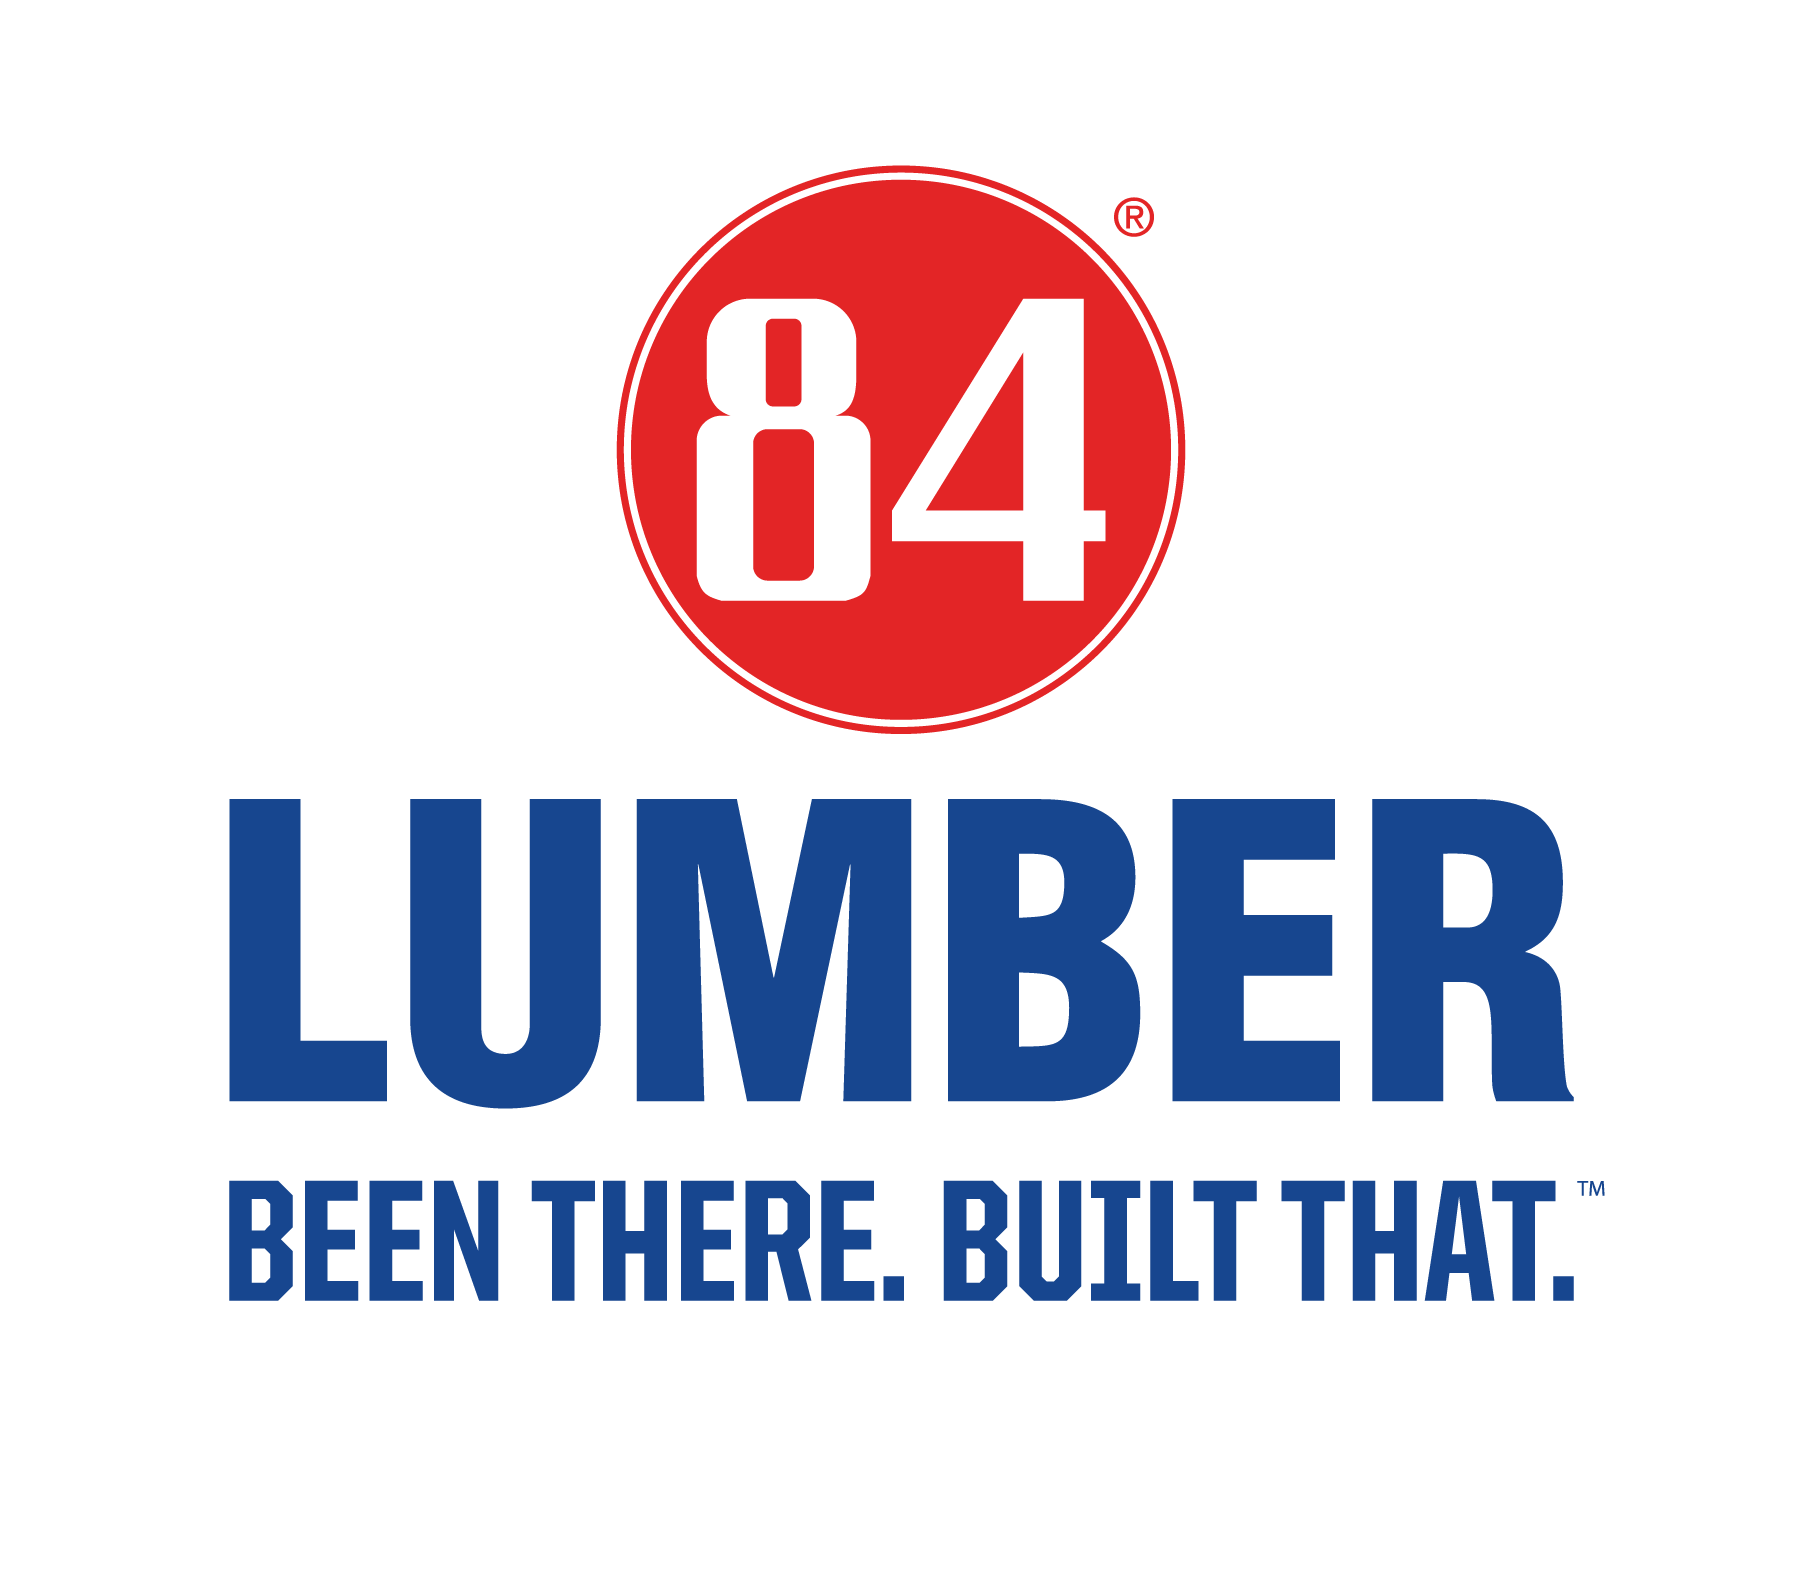 20200803_84_Lumber-BTBT-Stacked-redblue